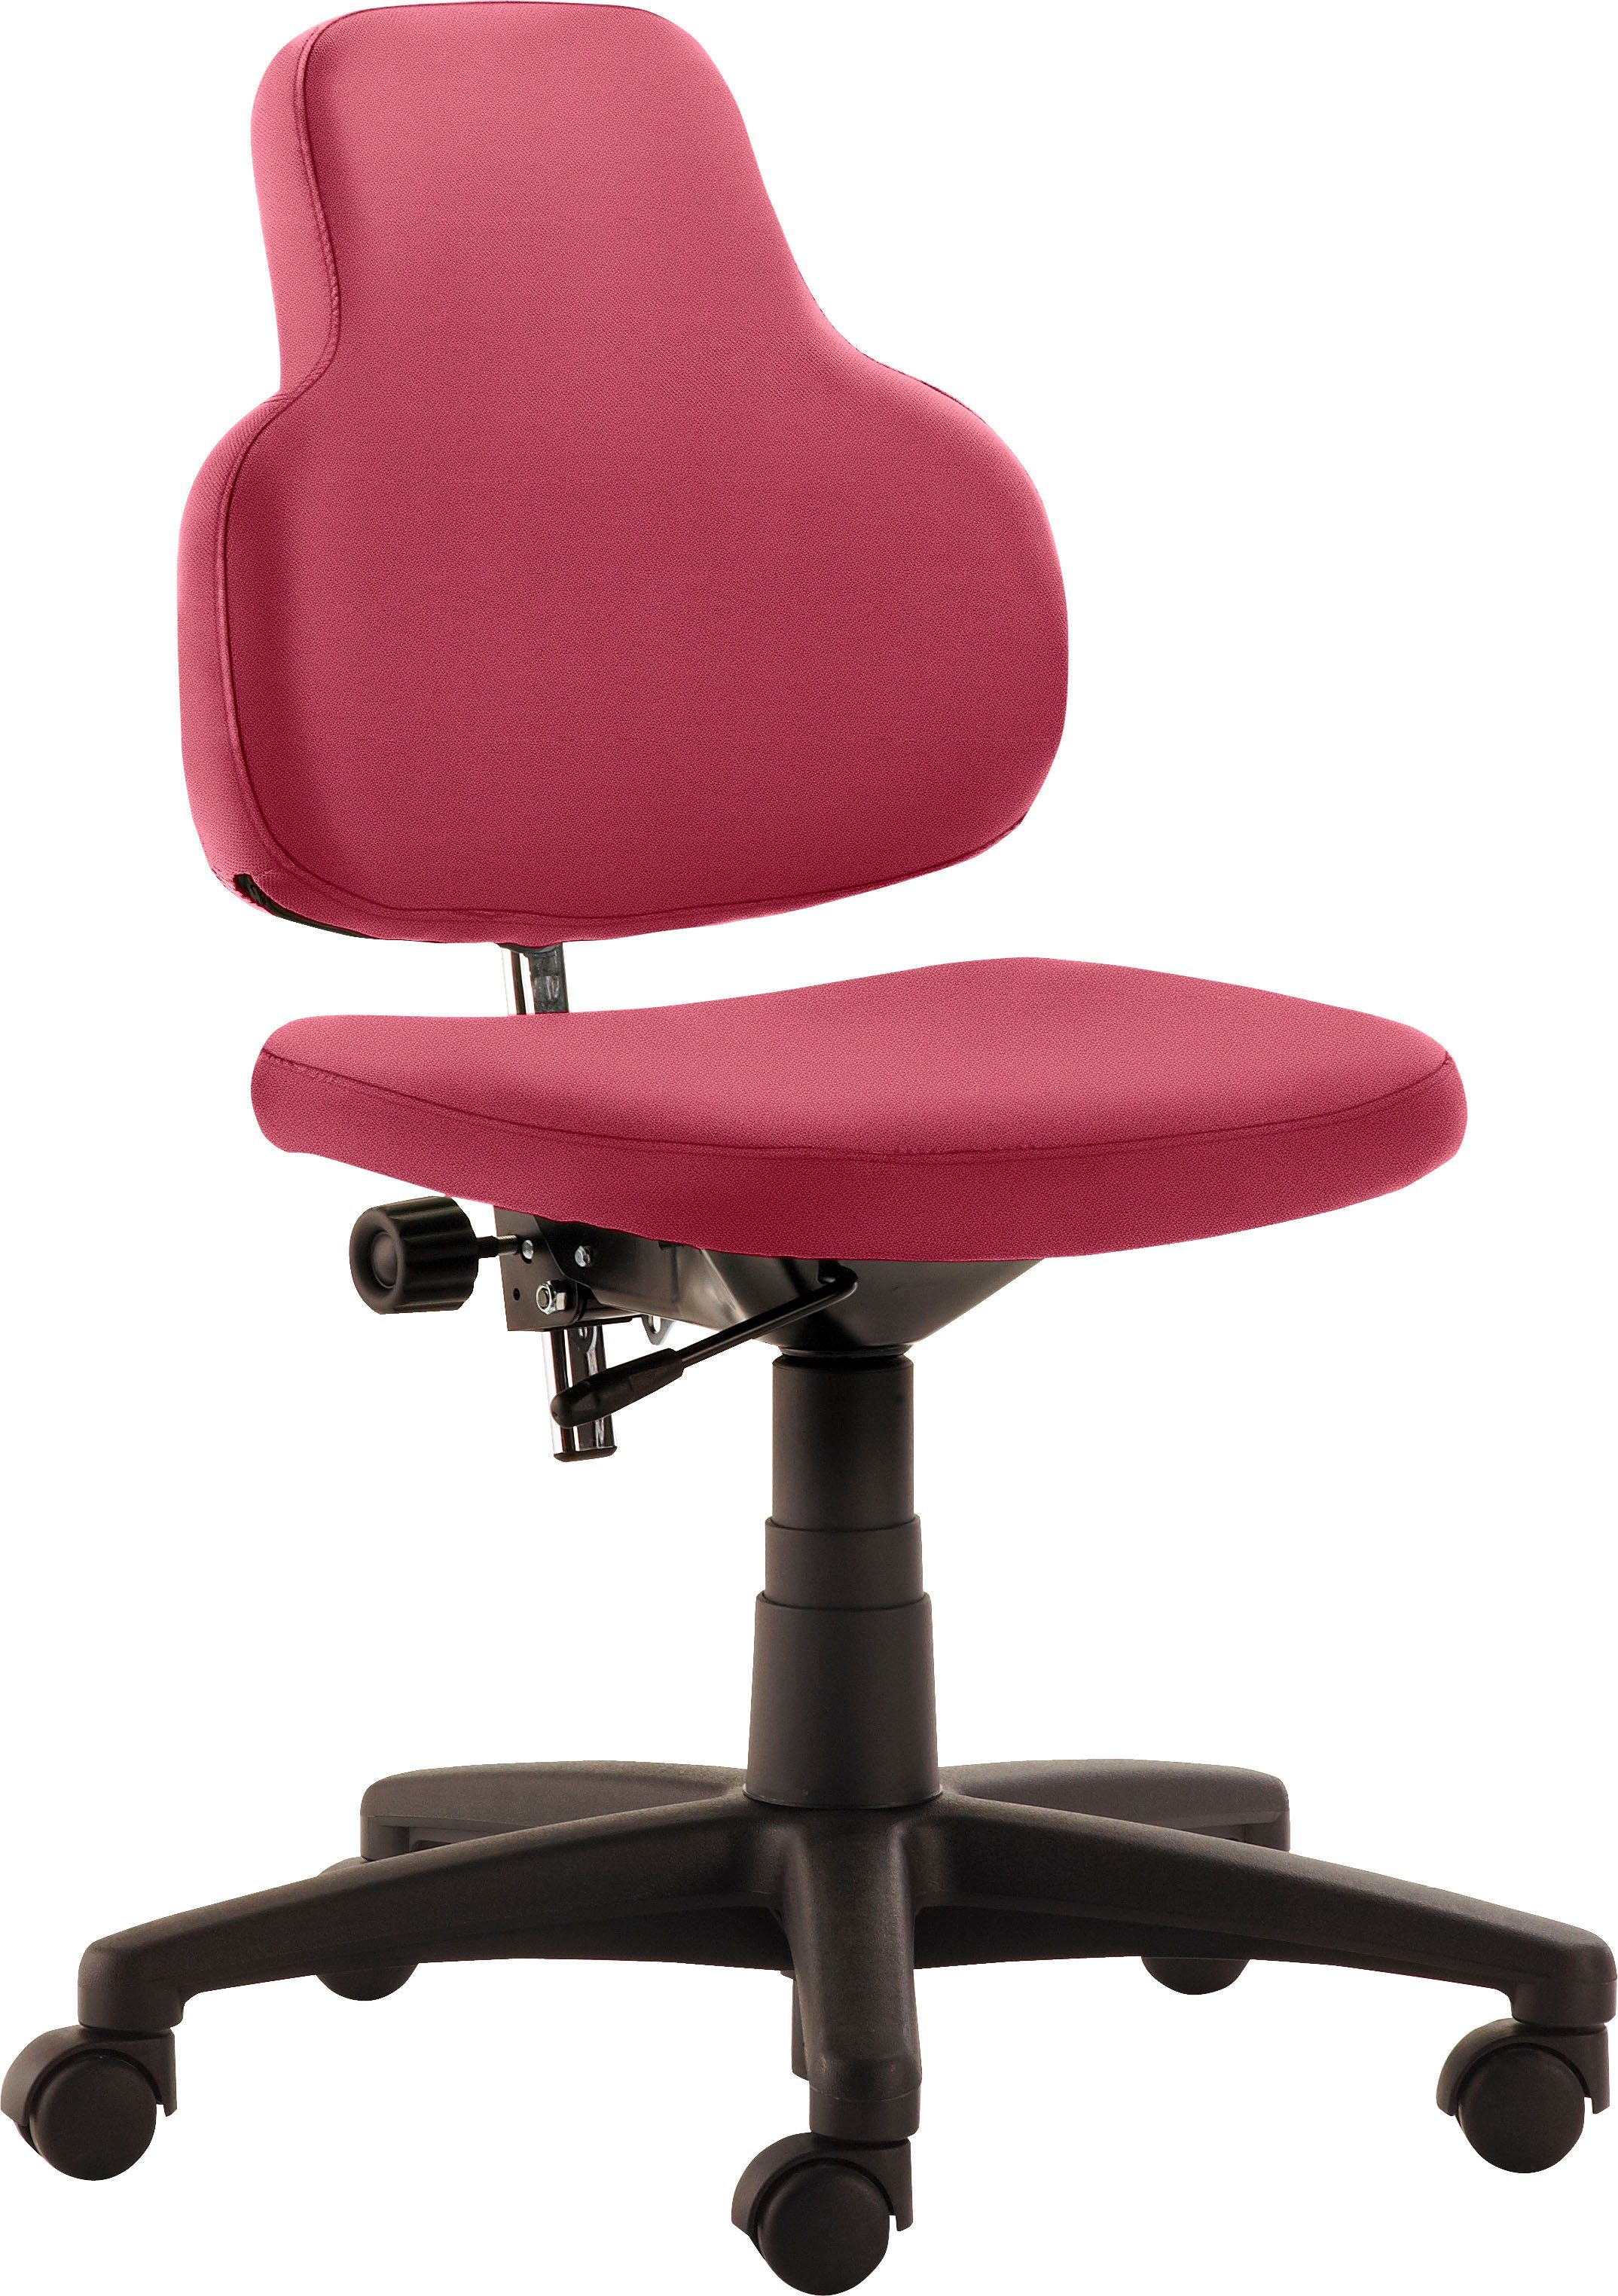 Mayer rot-violett Bürostuhl | mitwachsend Sitzmöbel rot-violett myONE, Kinderdrehstuhl